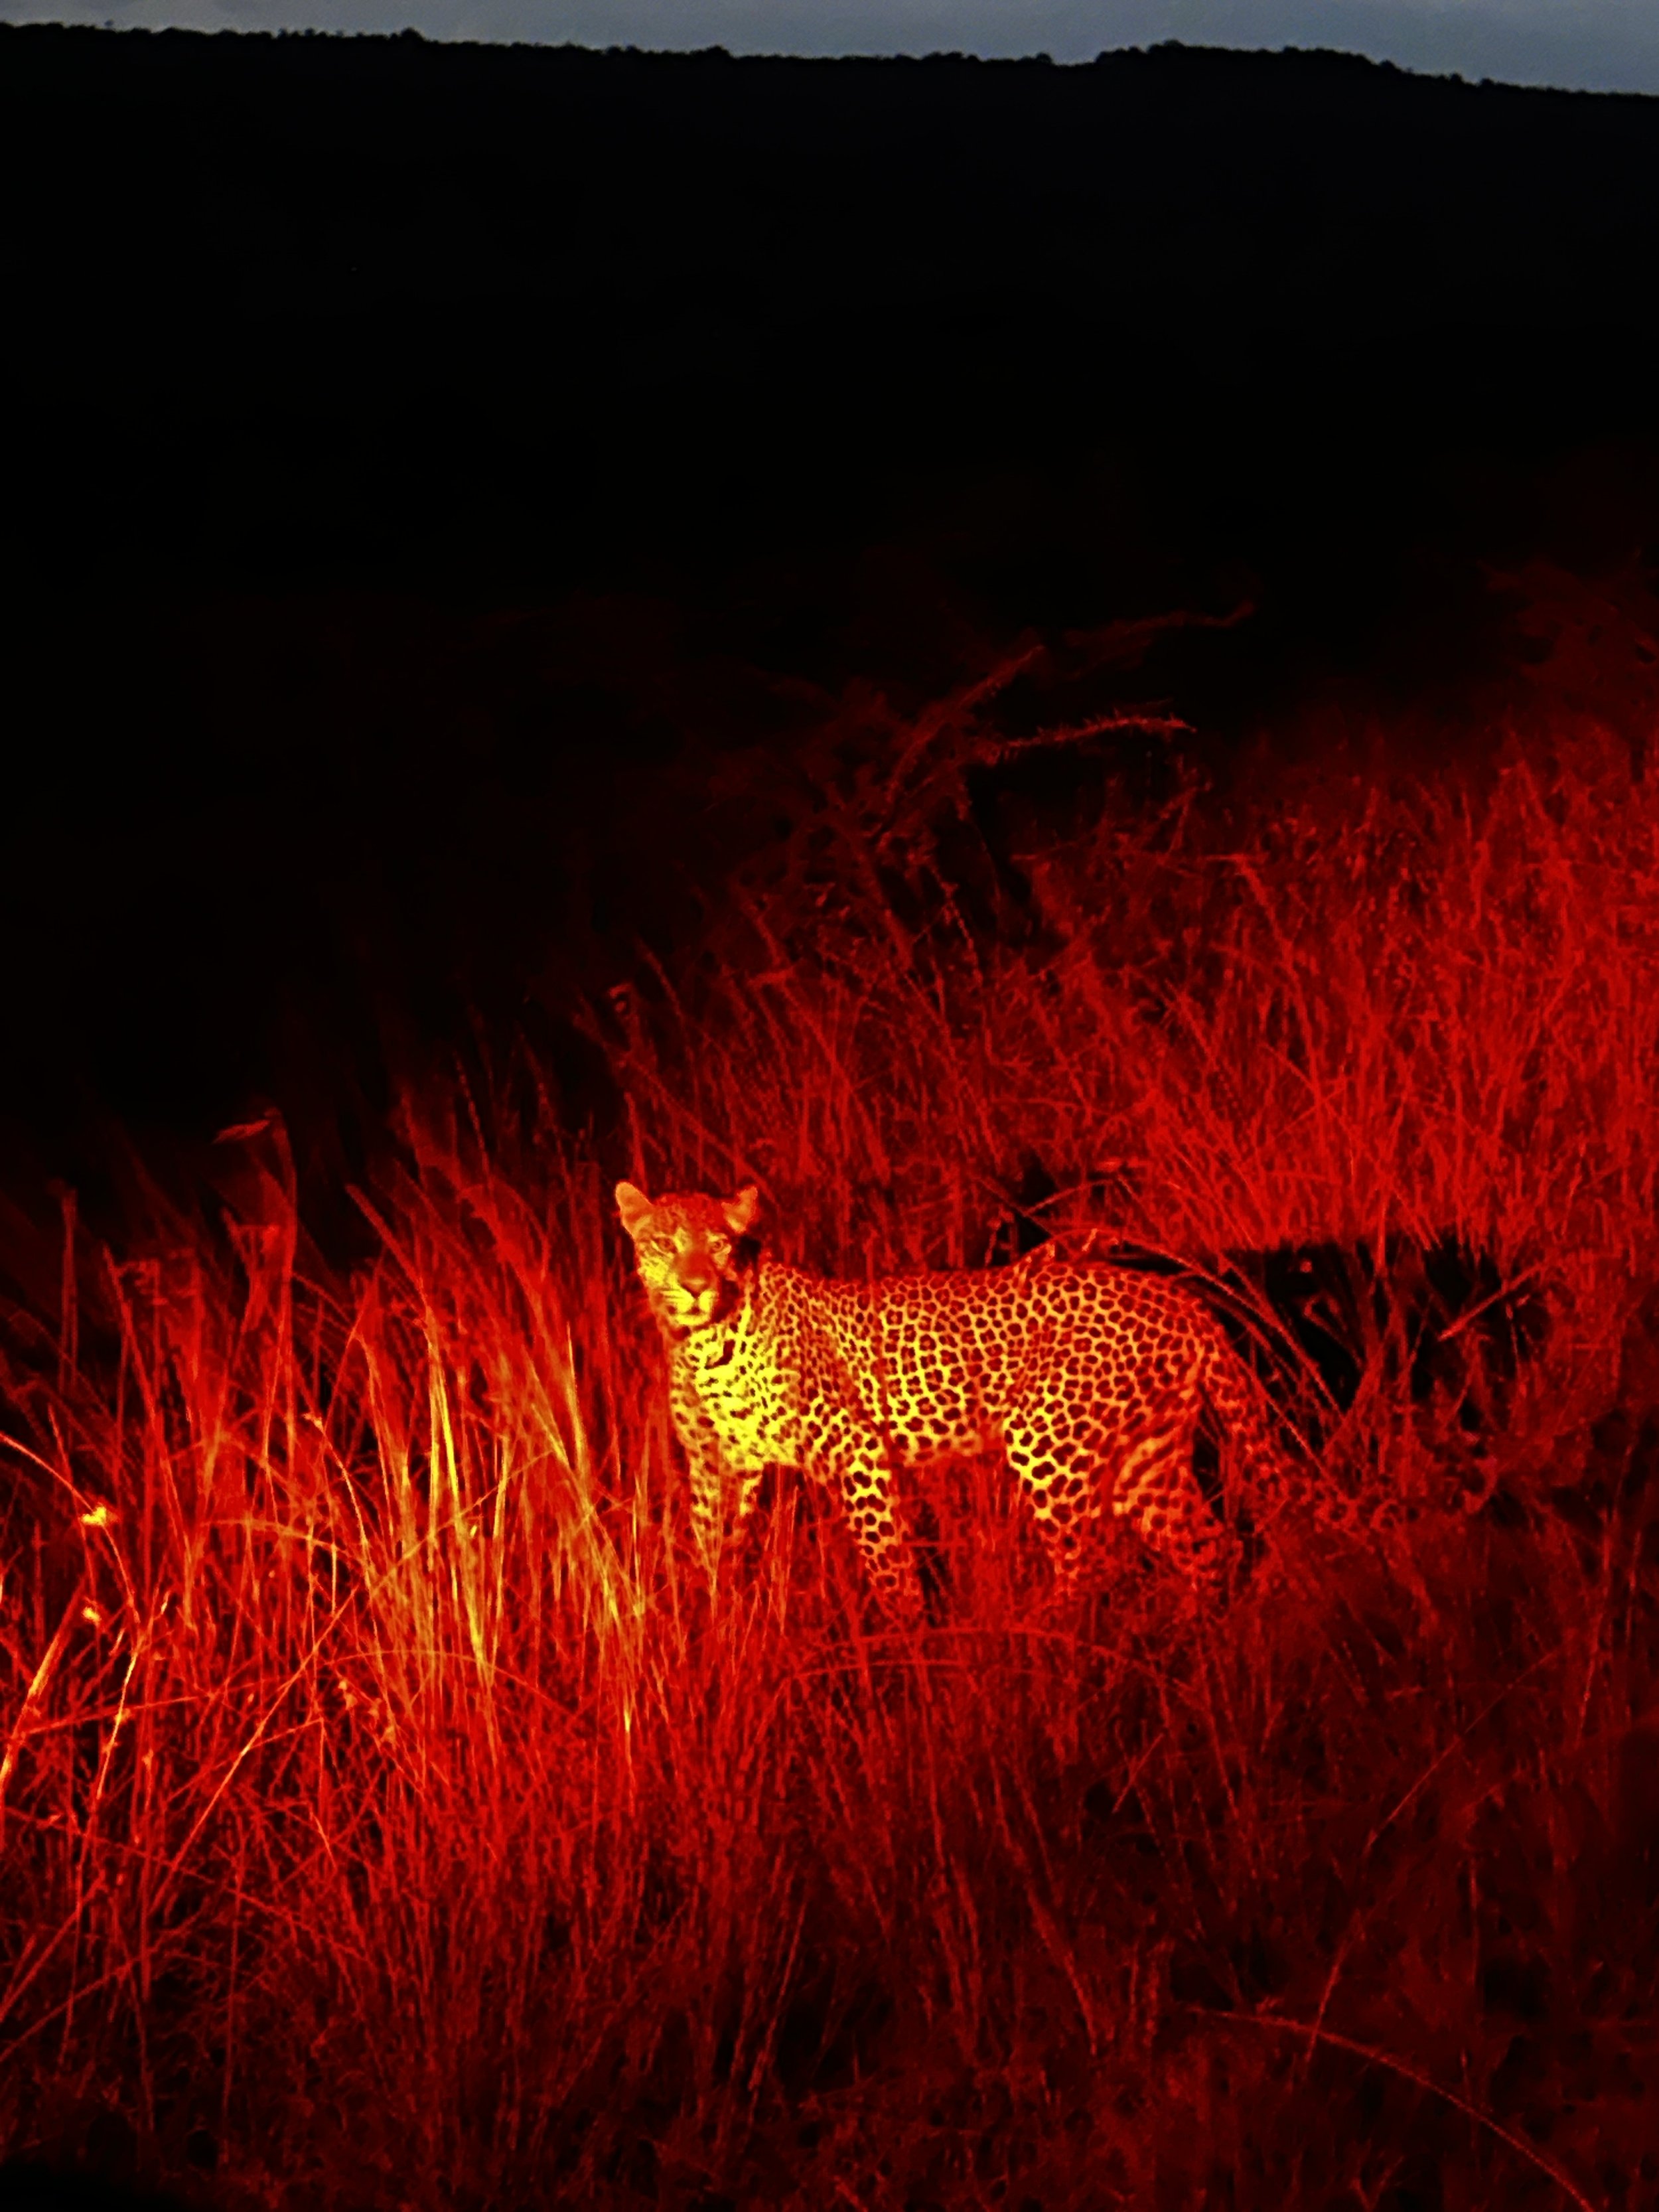 leapard at night.JPG